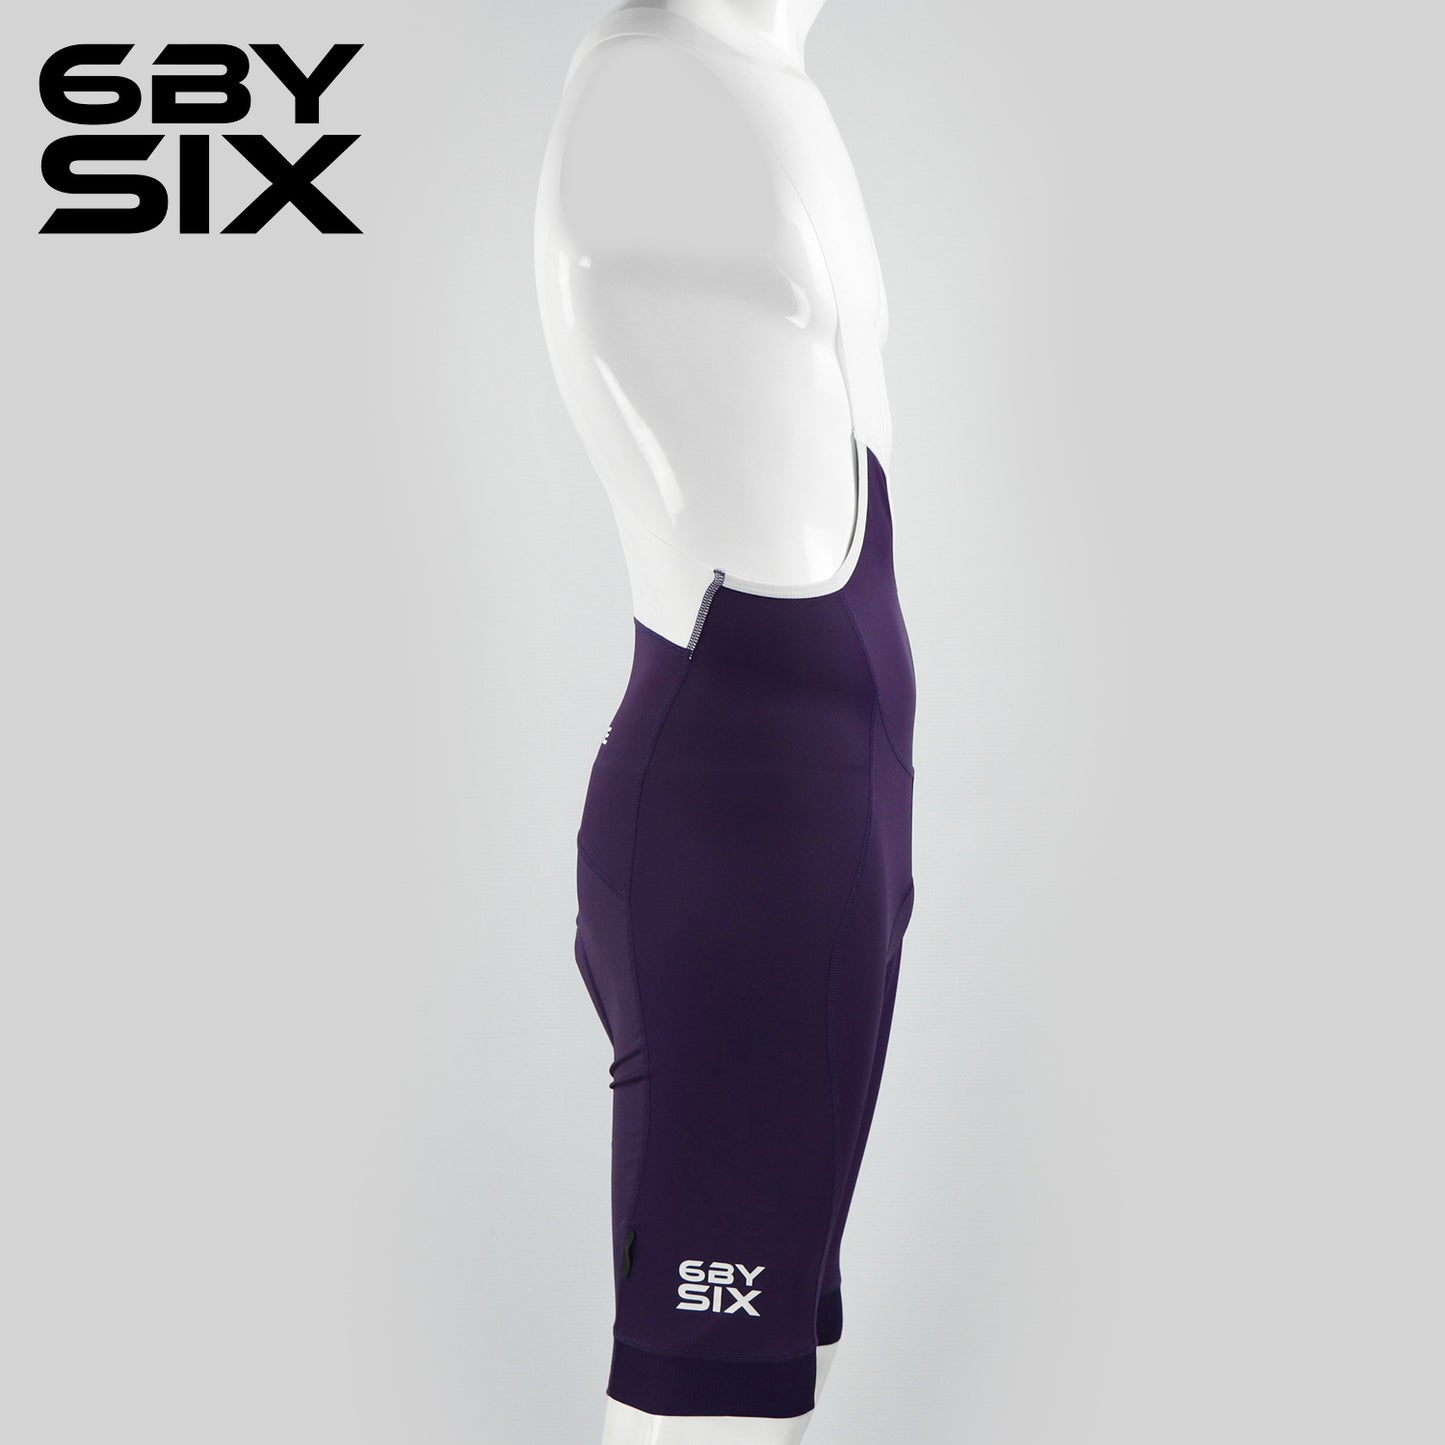 6bySix Adaptive Bib Shorts - Violet